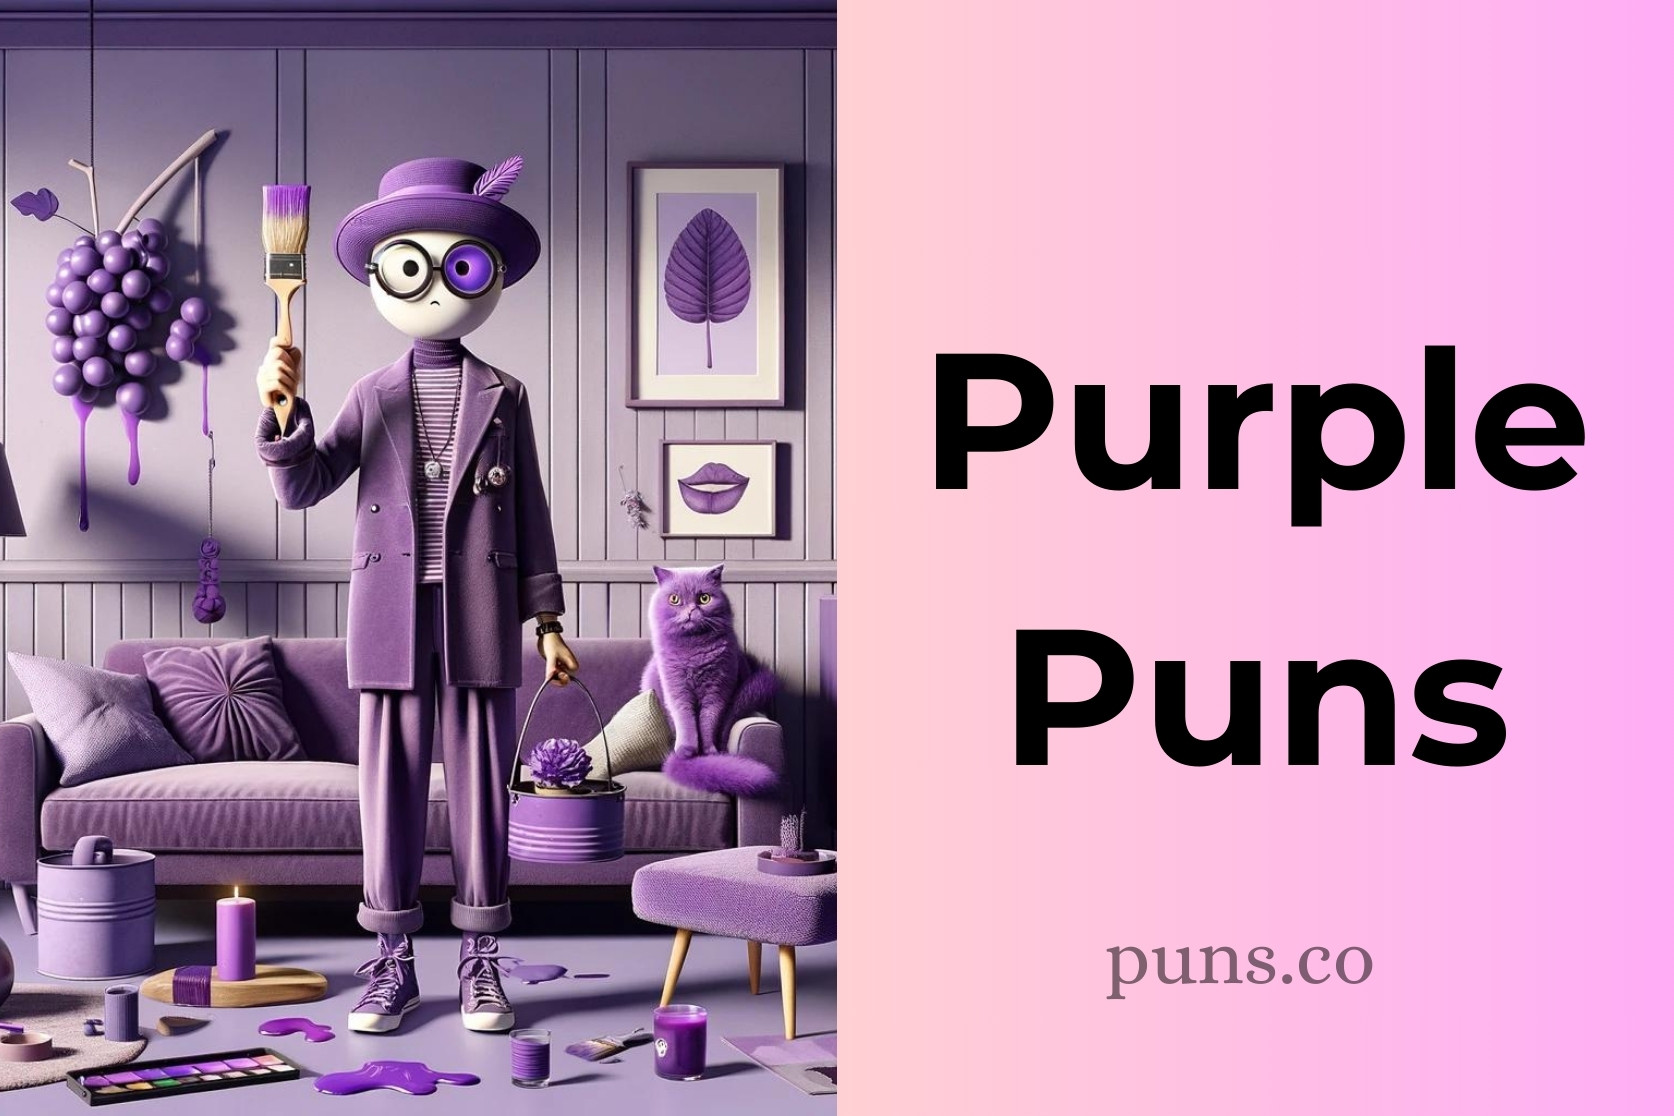 Purple Puns